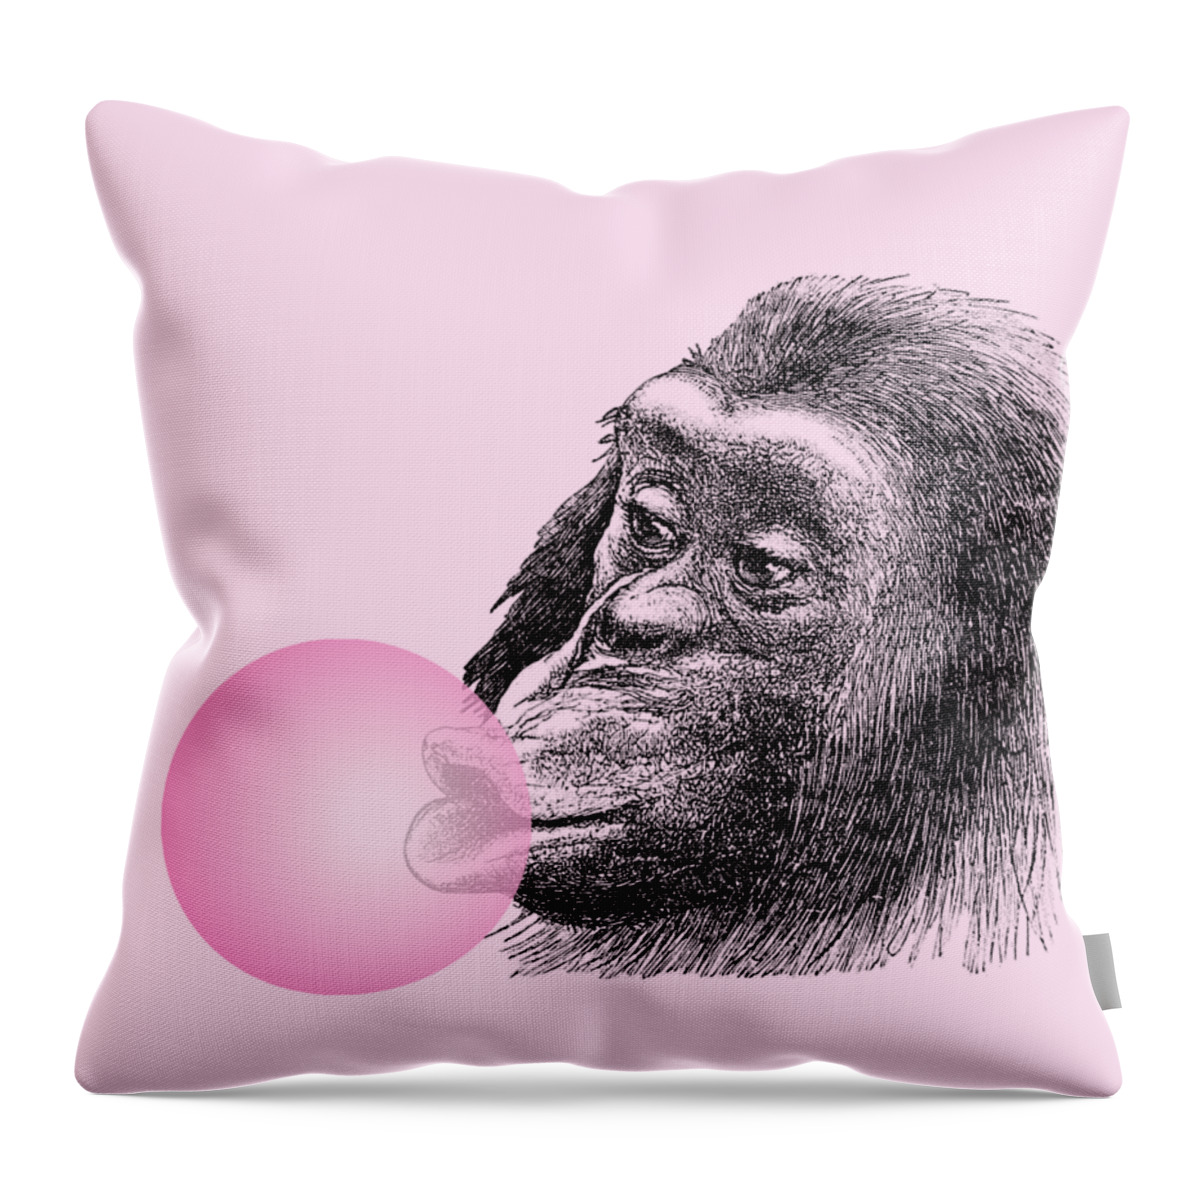 Chimpanzee Throw Pillow featuring the digital art Chimpanzee with pink bubblegum by Madame Memento